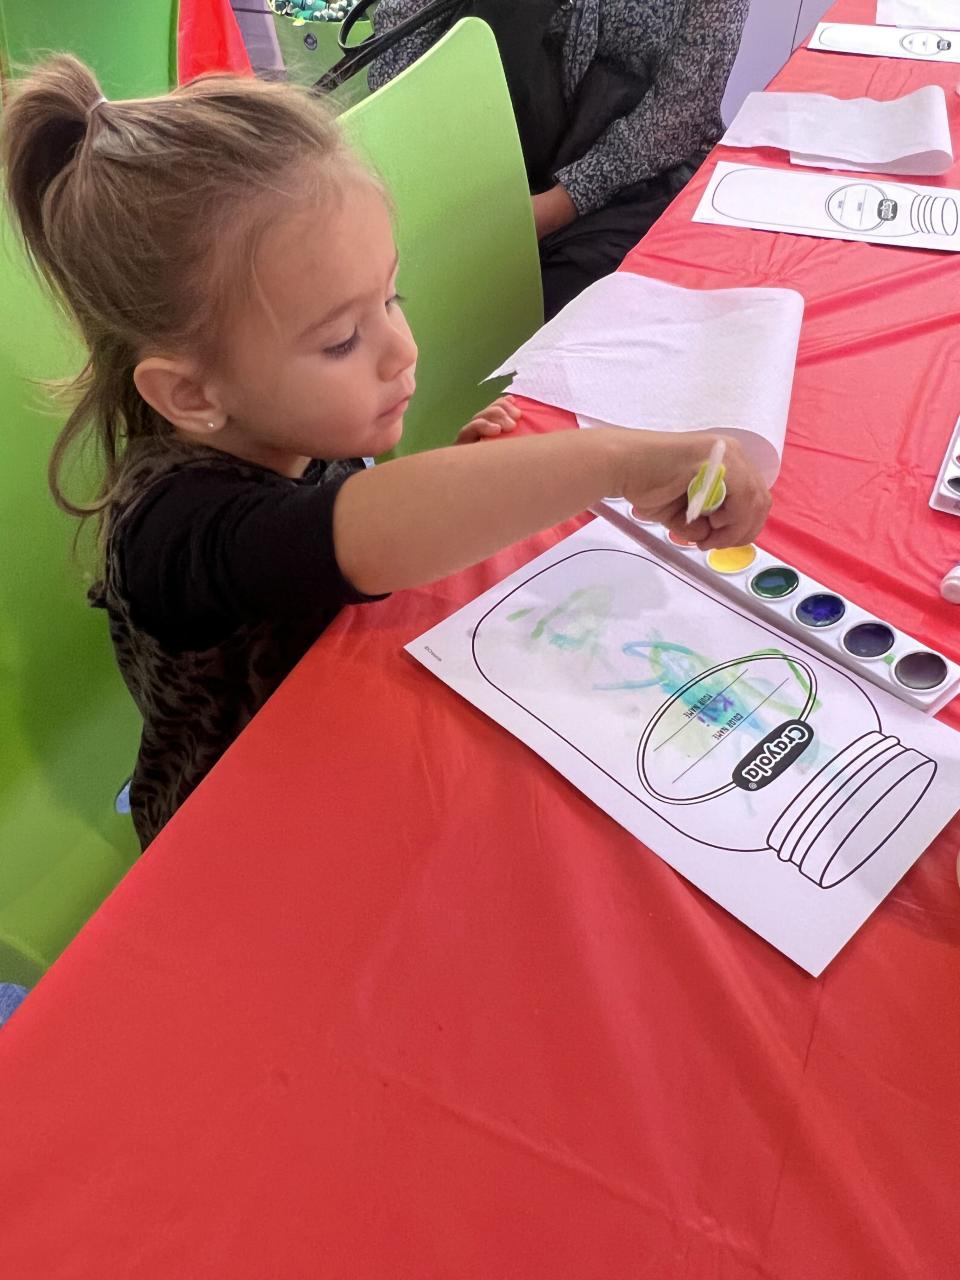 Children participated in art activities related to the book “Crayola: Ellie’s Crayon Adventure.” (Crayola Experience Orlando)